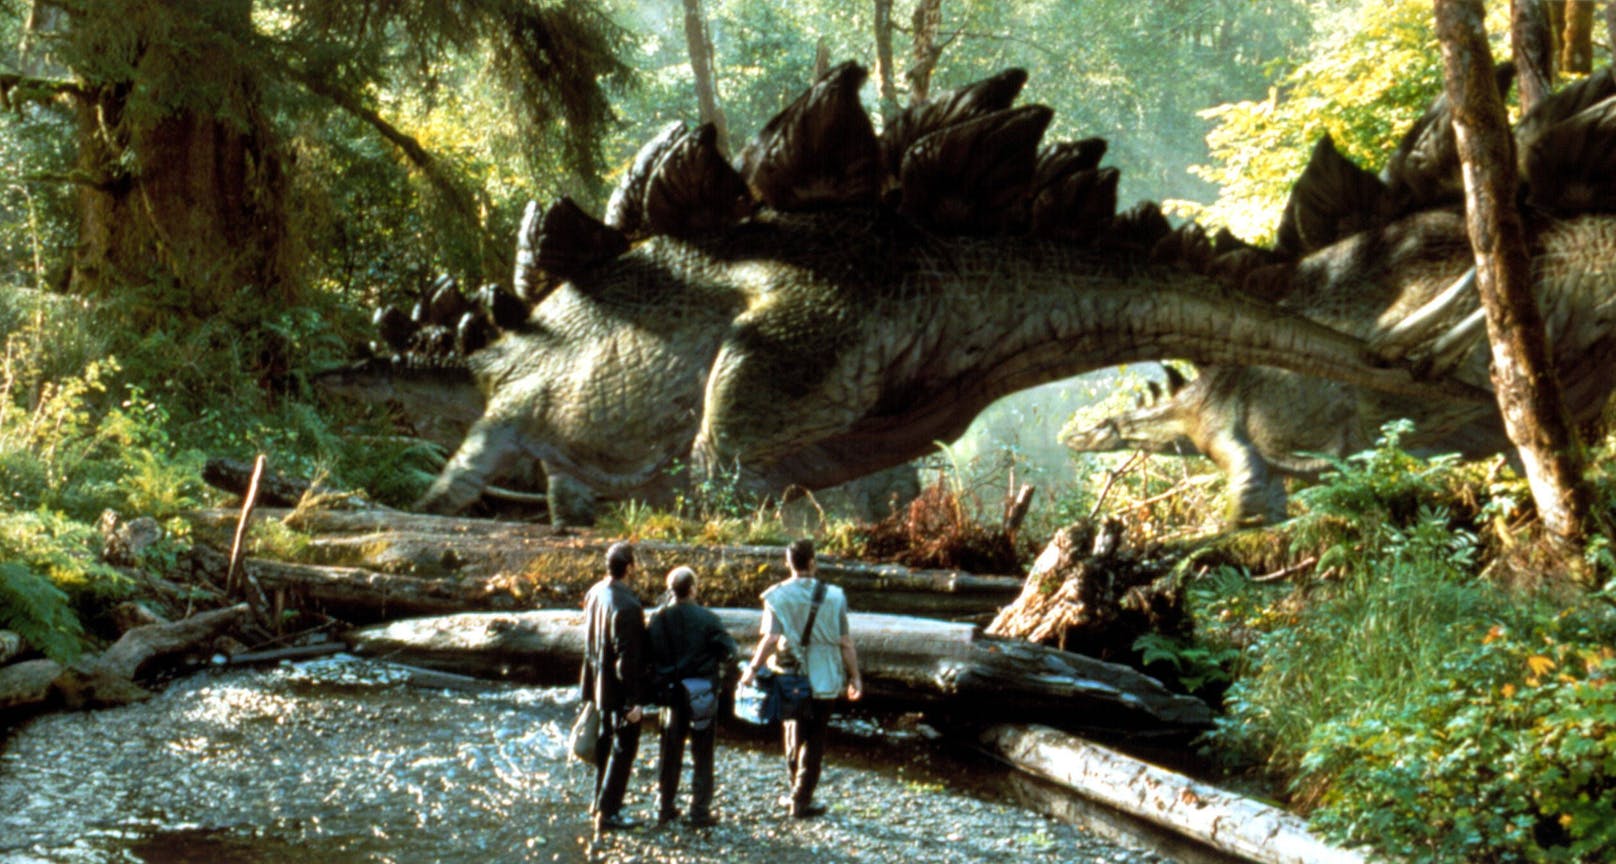 1997 erschien "Jurassic Park"